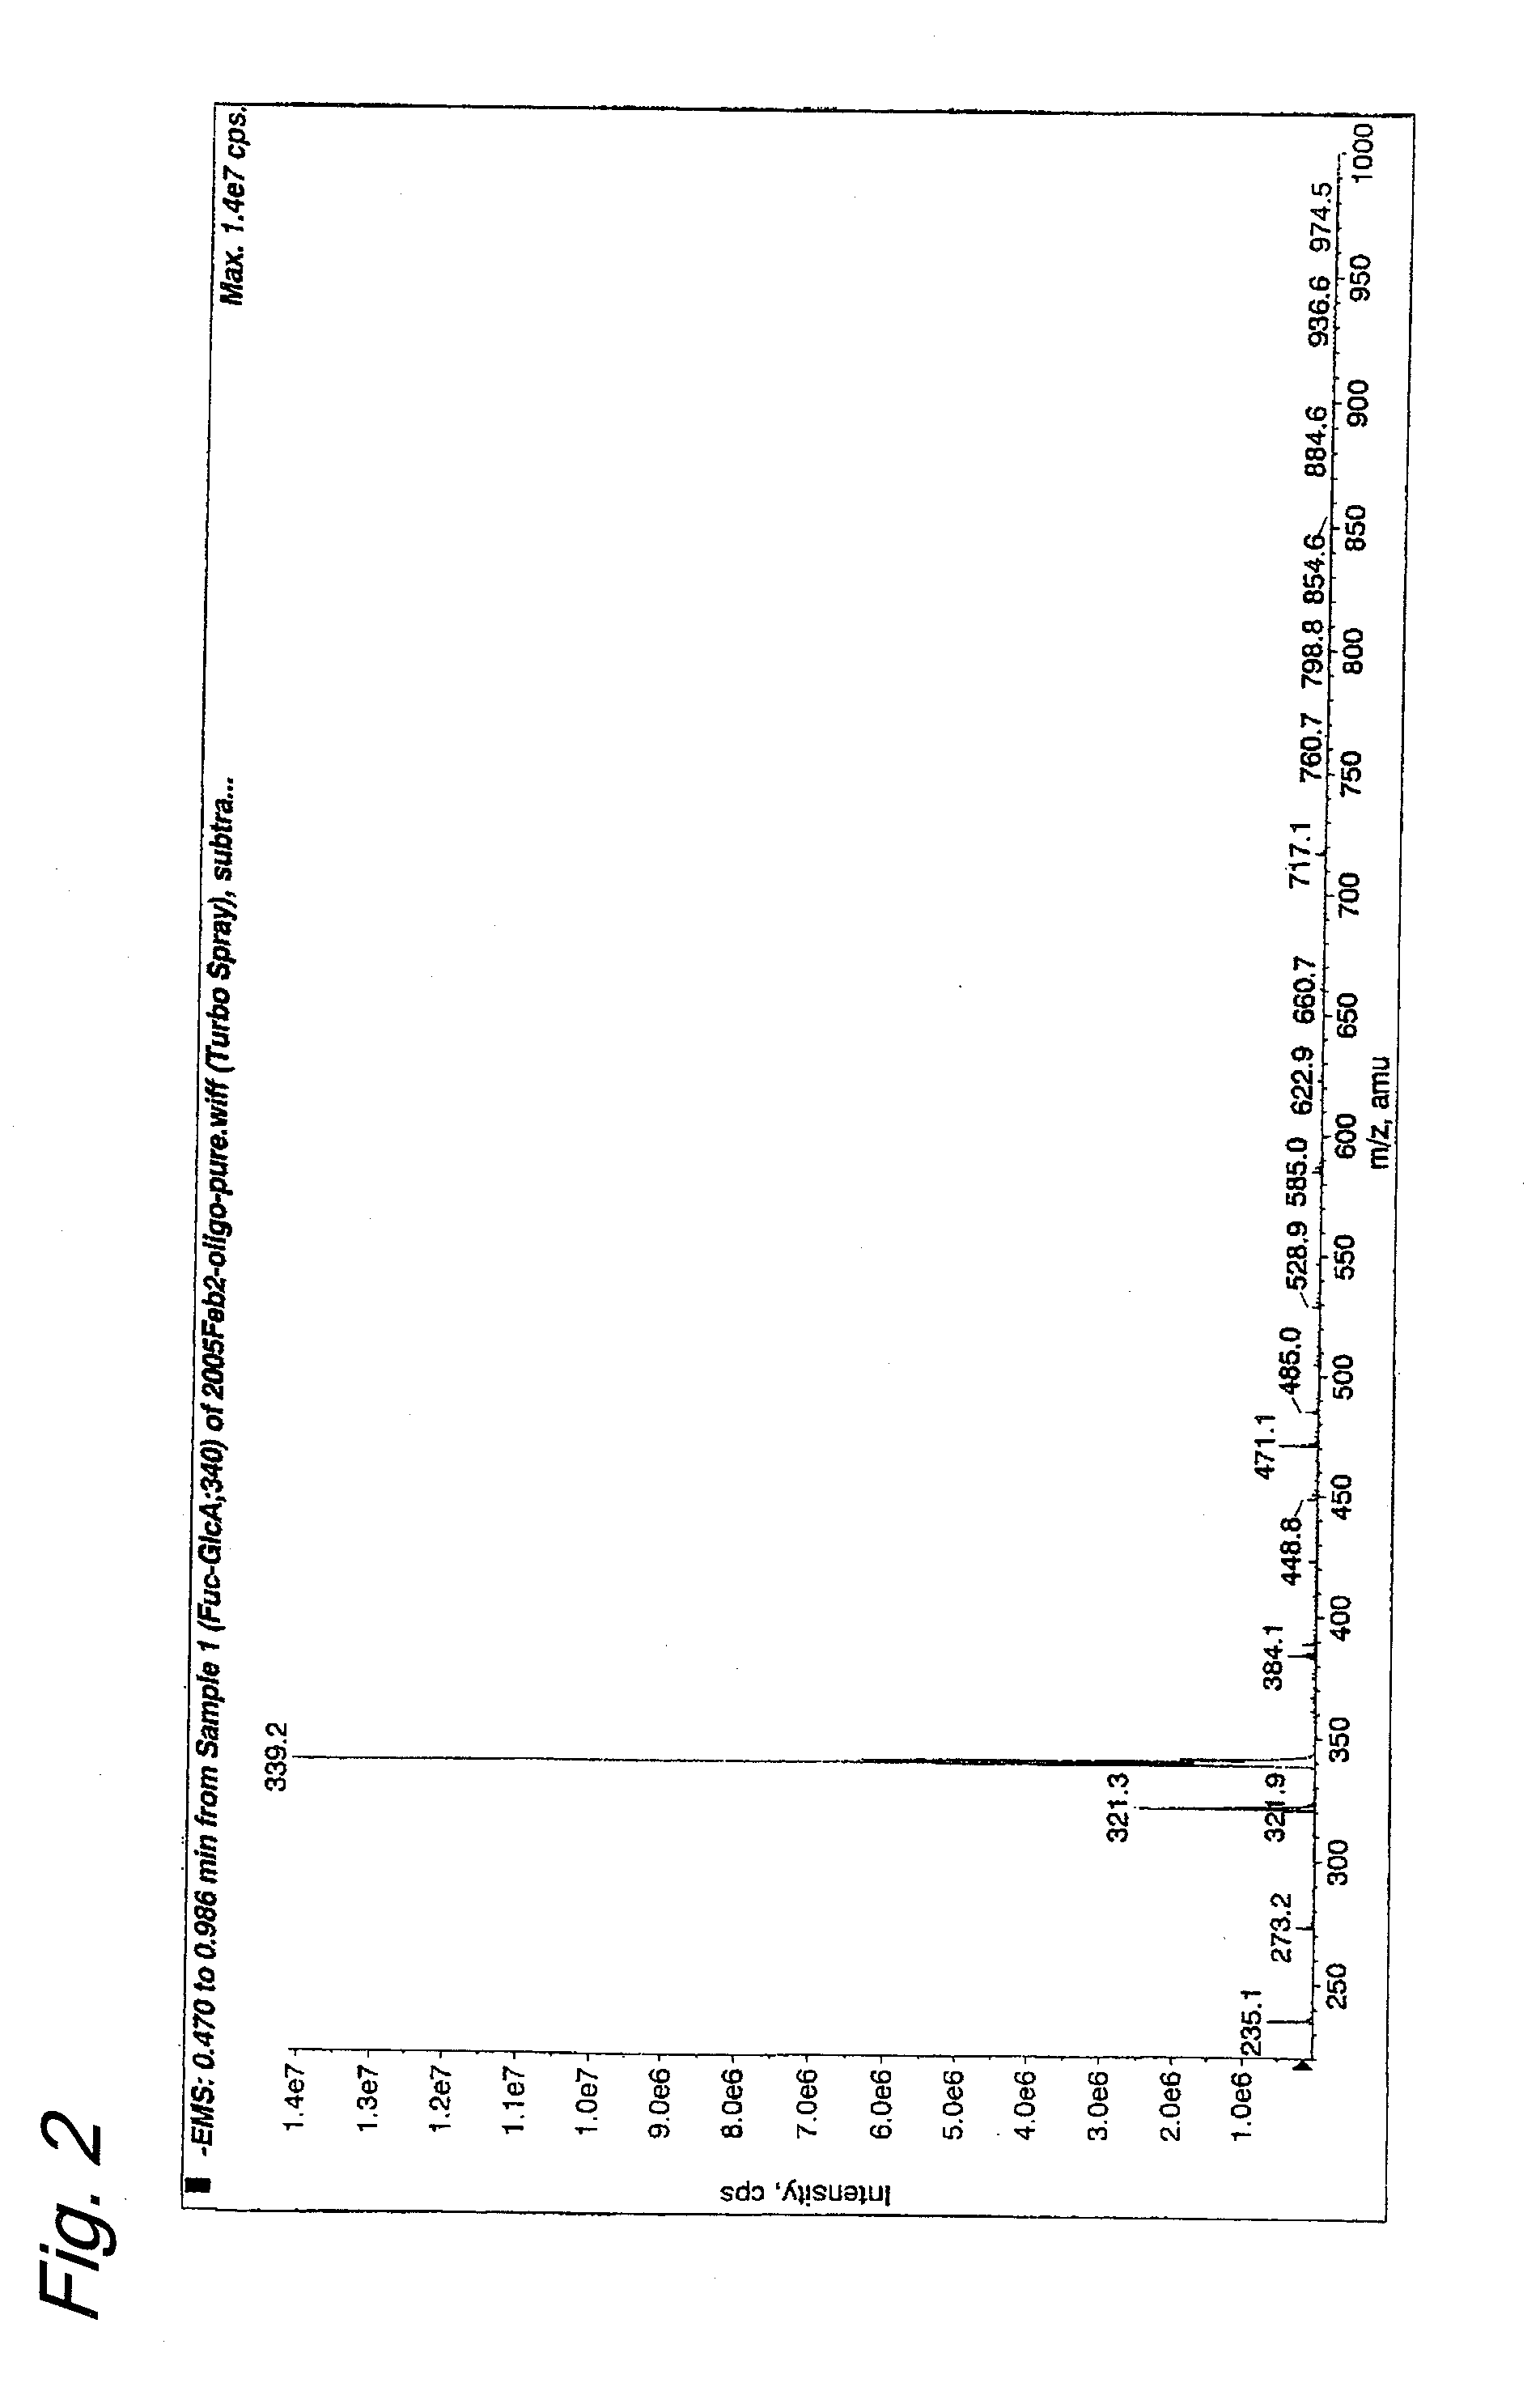 Oligosaccharides derived from fucoidan